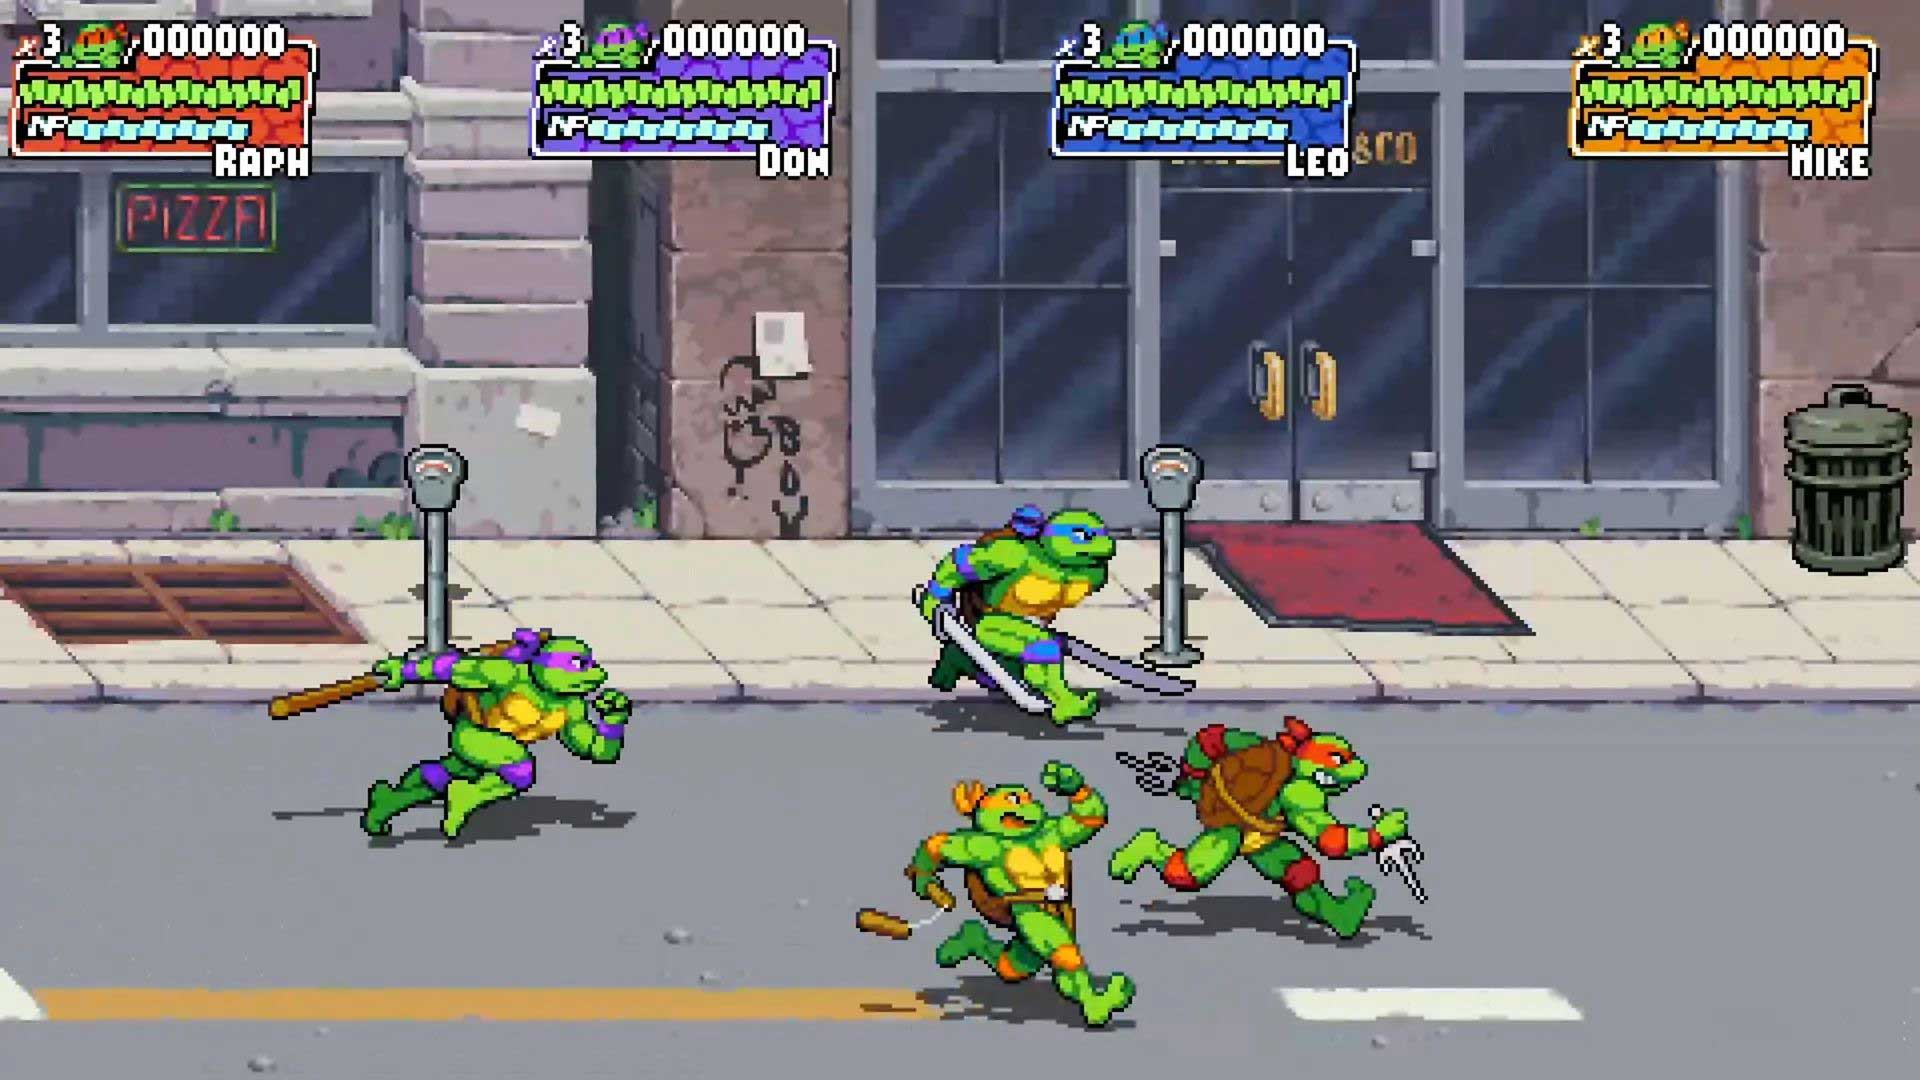 Switch Teenage Mutant Ninja Turtles - Shredder's Revenge 